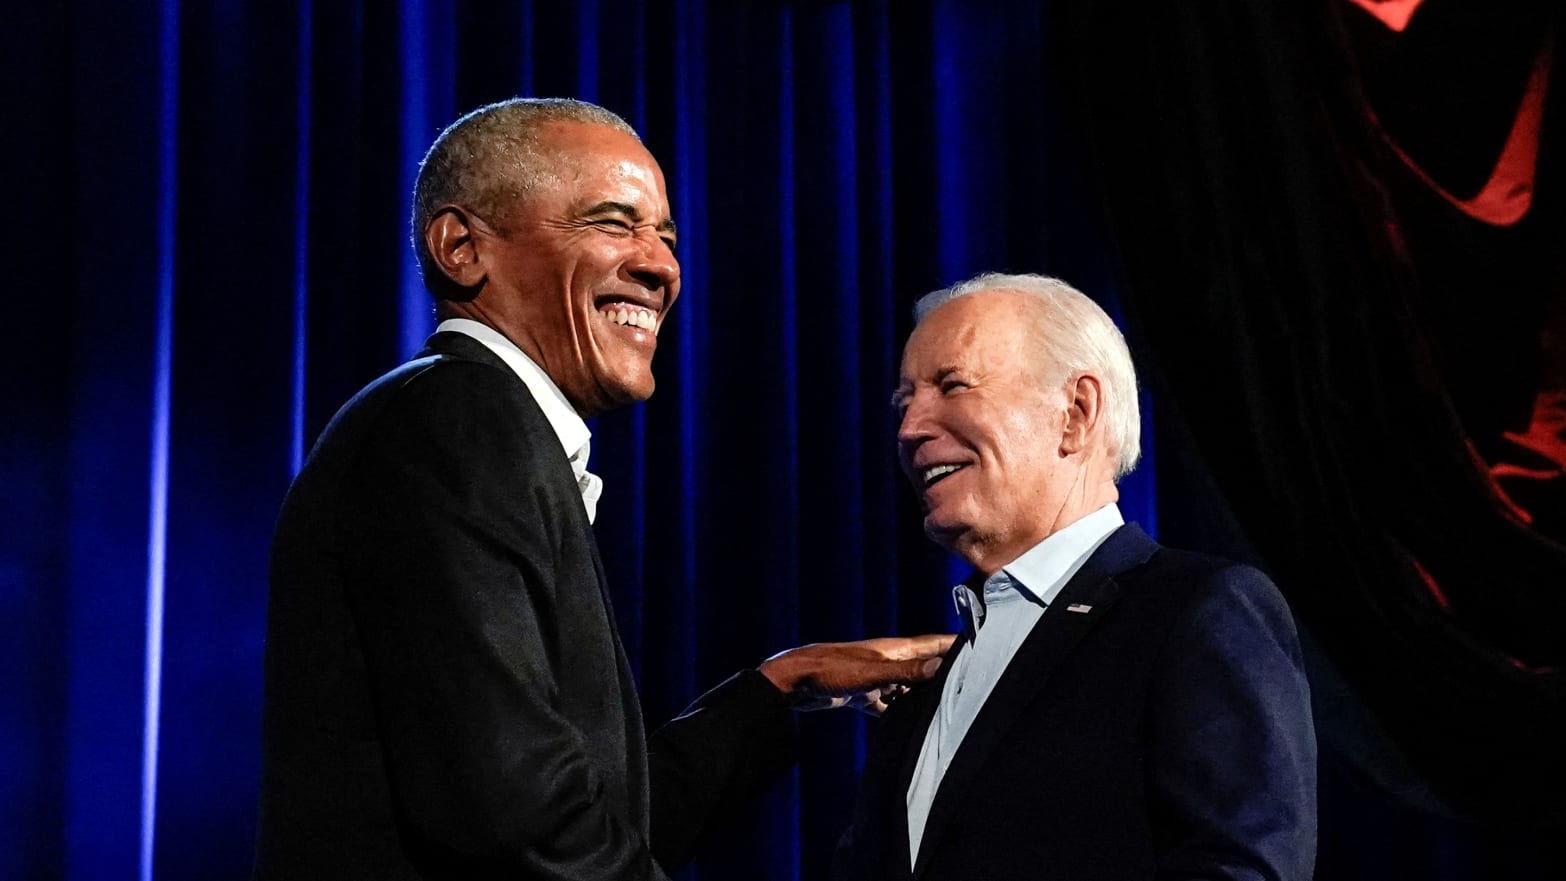 Barack Obama laughing with Joe Biden